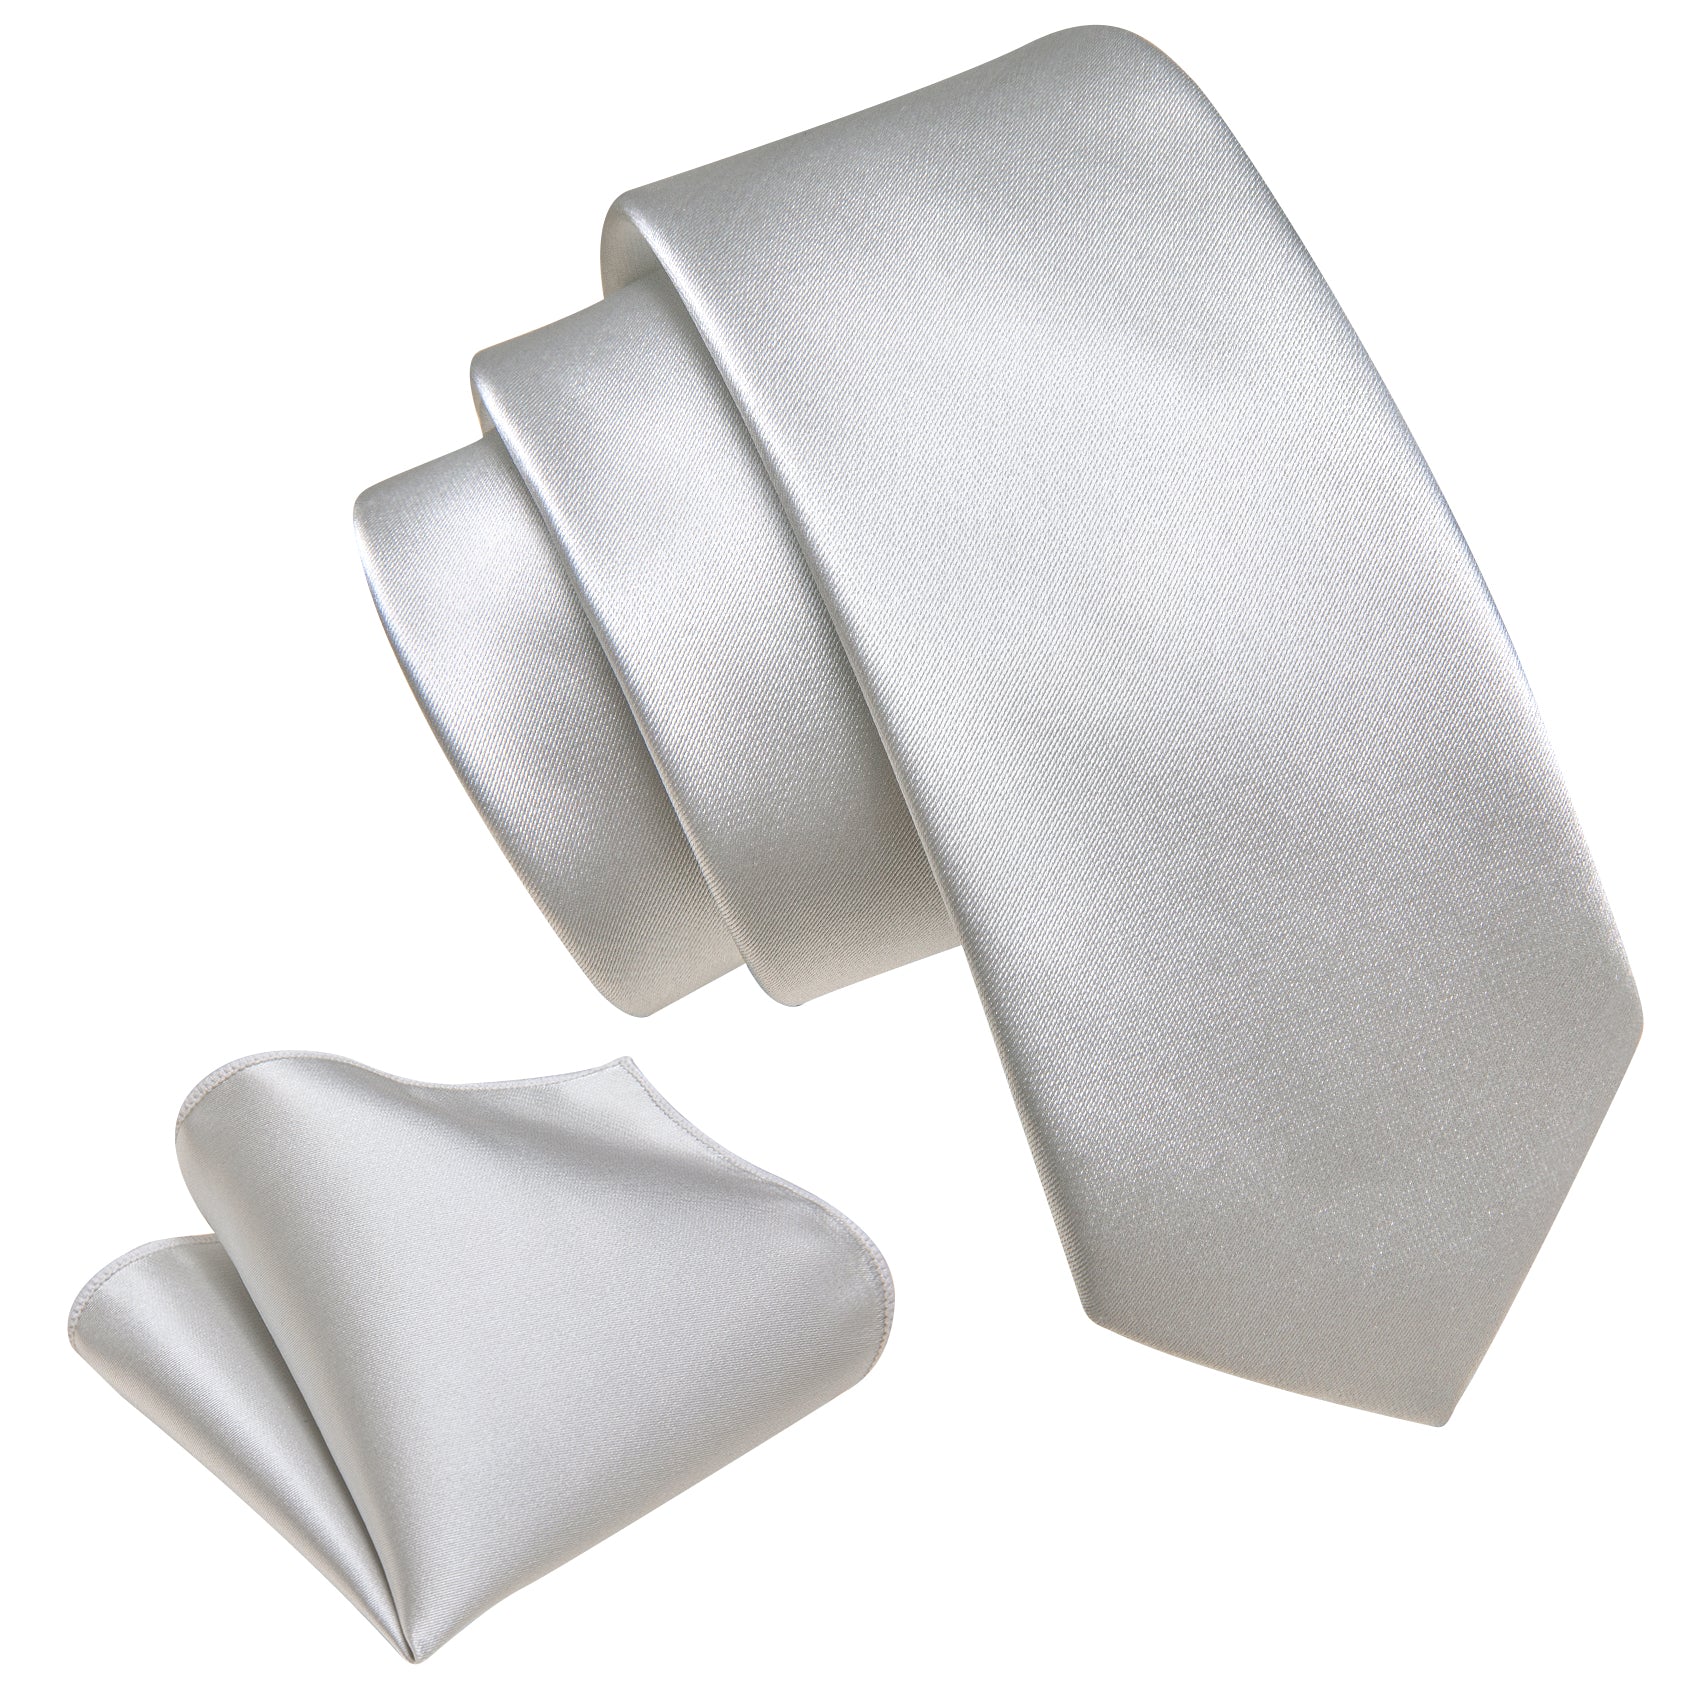 Grey White Solid Tie Pocket Square Set For Kids